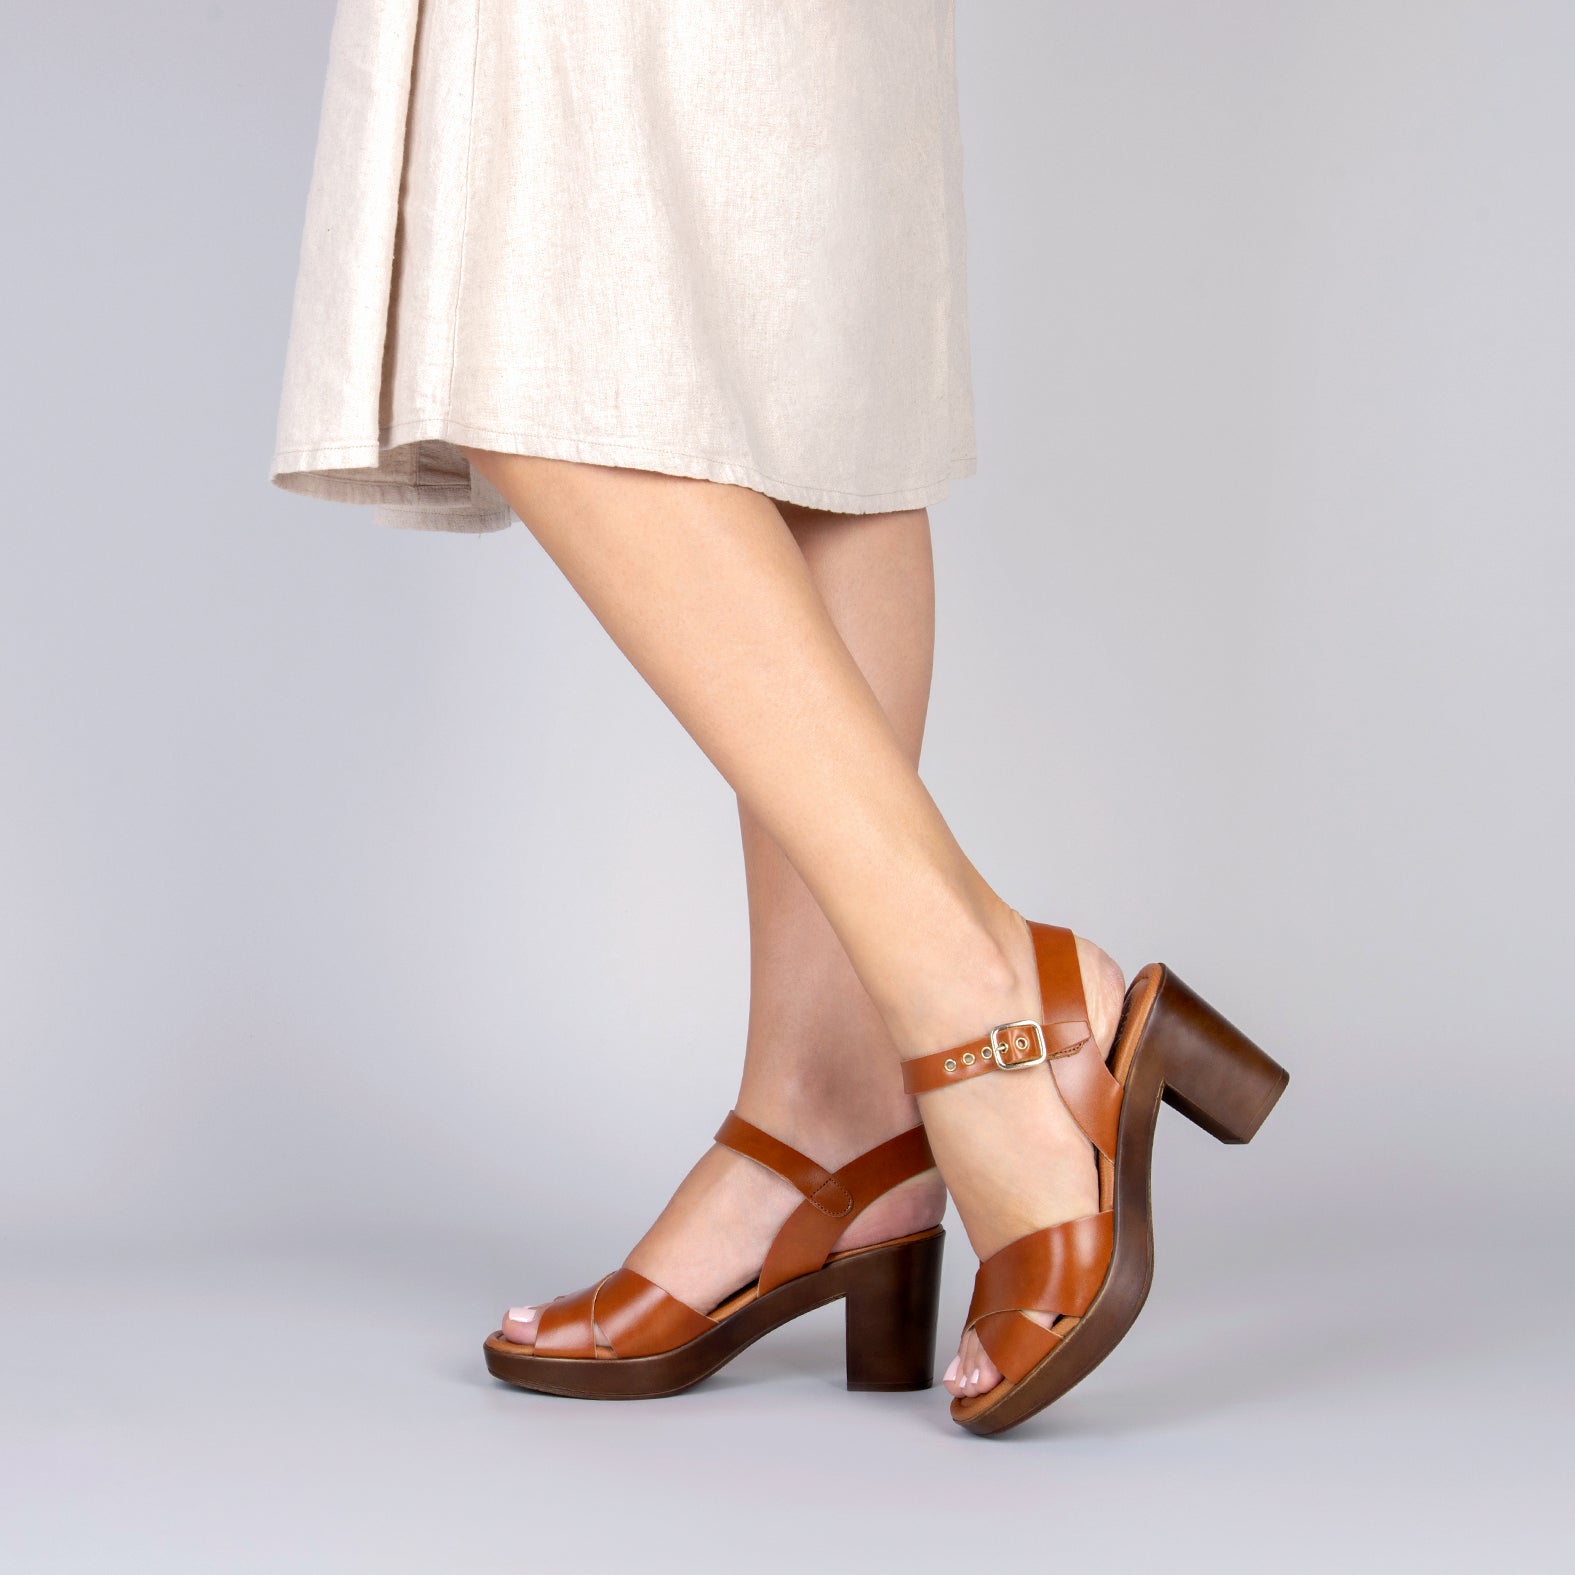 TAVIRA – CAMEL wide-heeled sandal